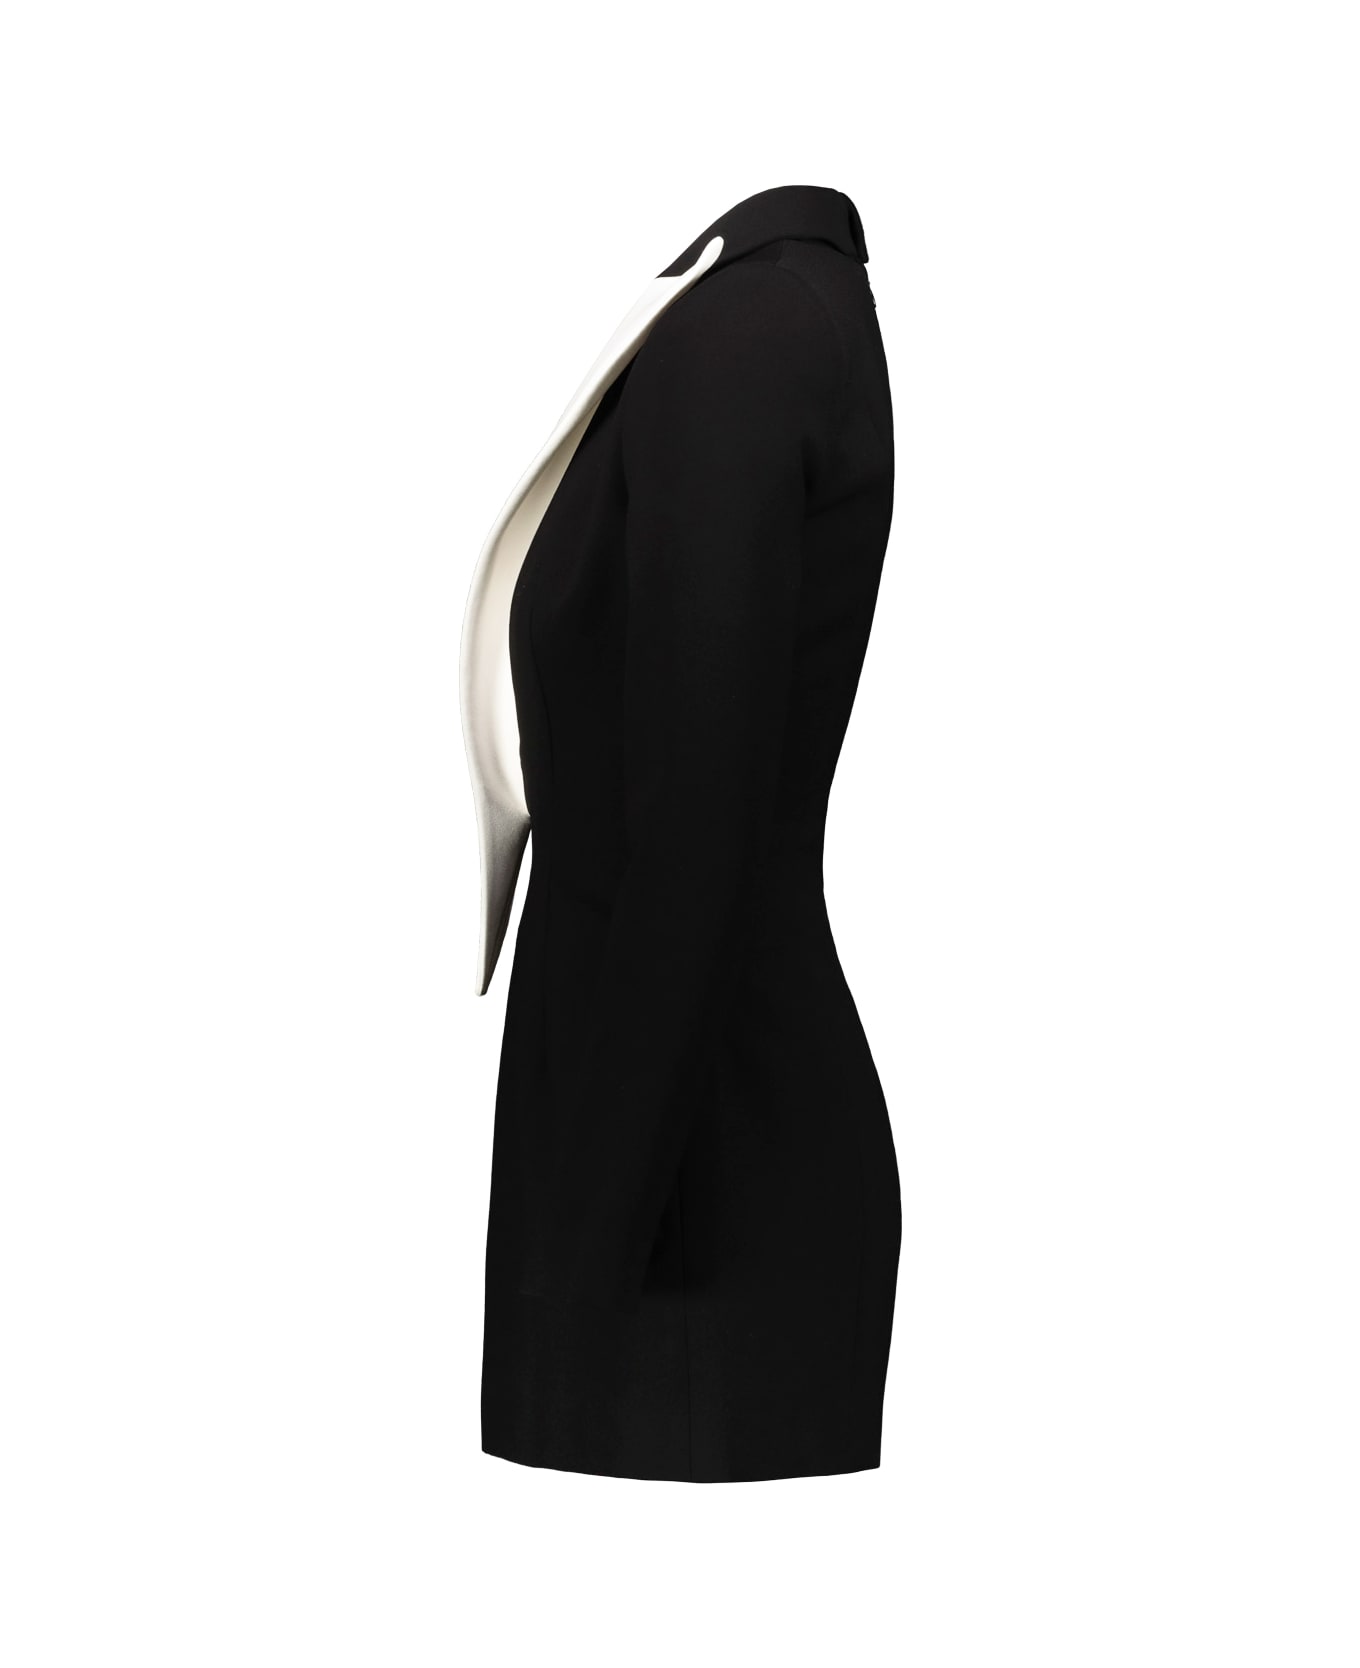 Monot Long Sleeve Dress - Black/white